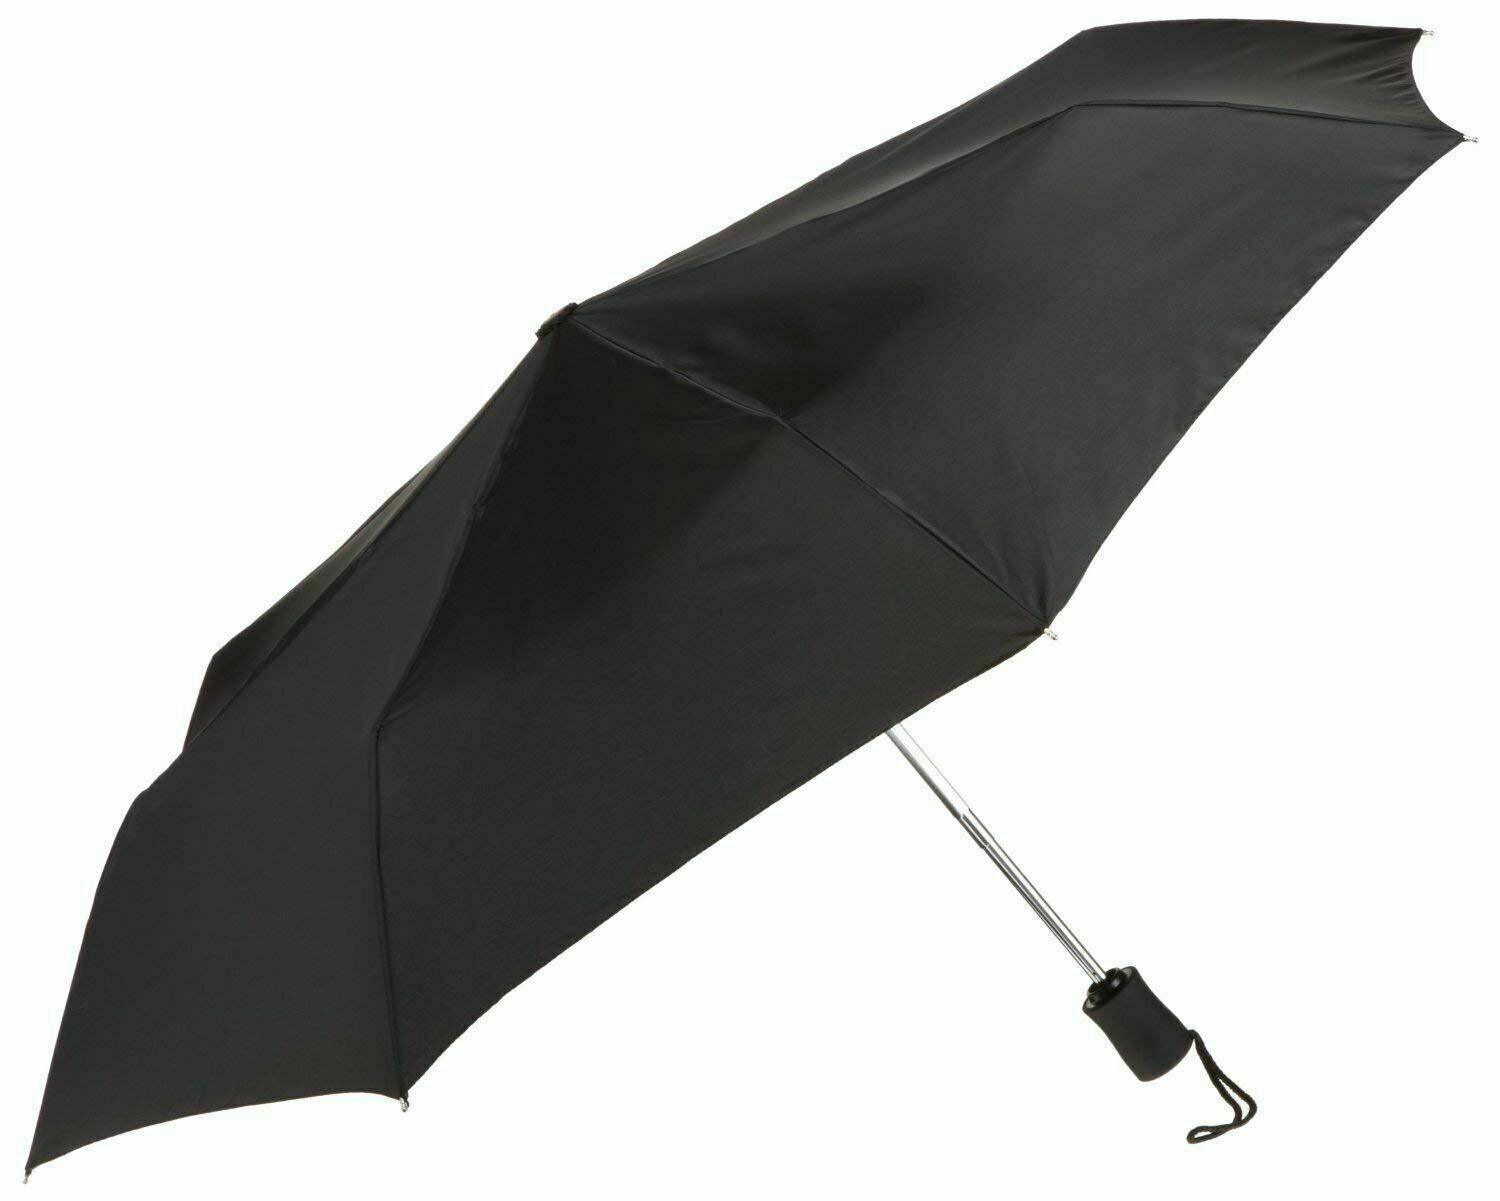 Rain Umbrella Small Compact Folding Opens 42"